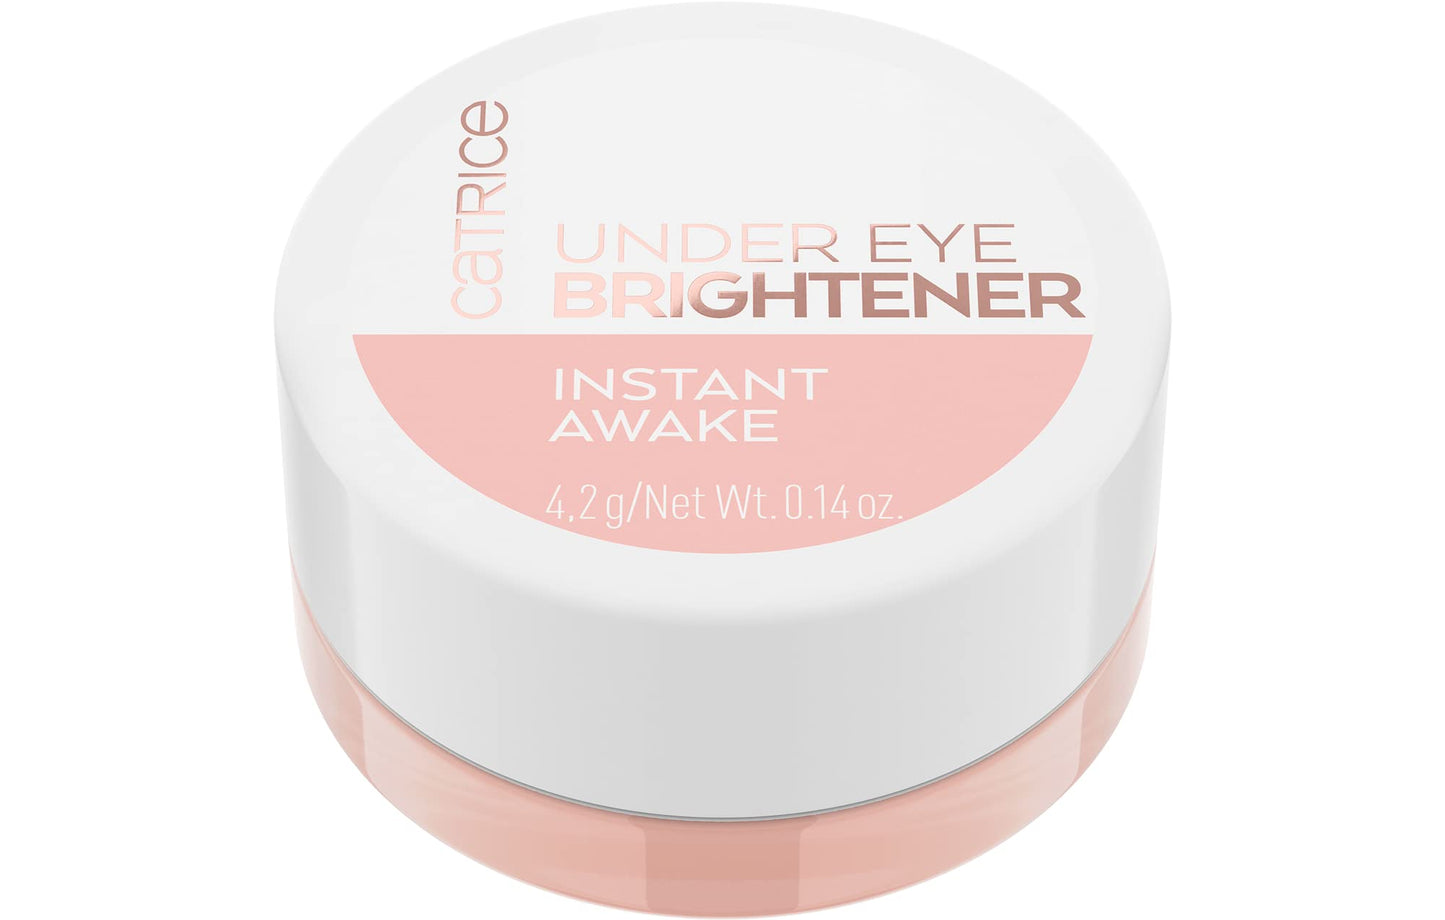 Catrice | Under Eye Brightener | Conceal & Brighten Dark Circles | With Hyaluronic Acid & Shea Butter